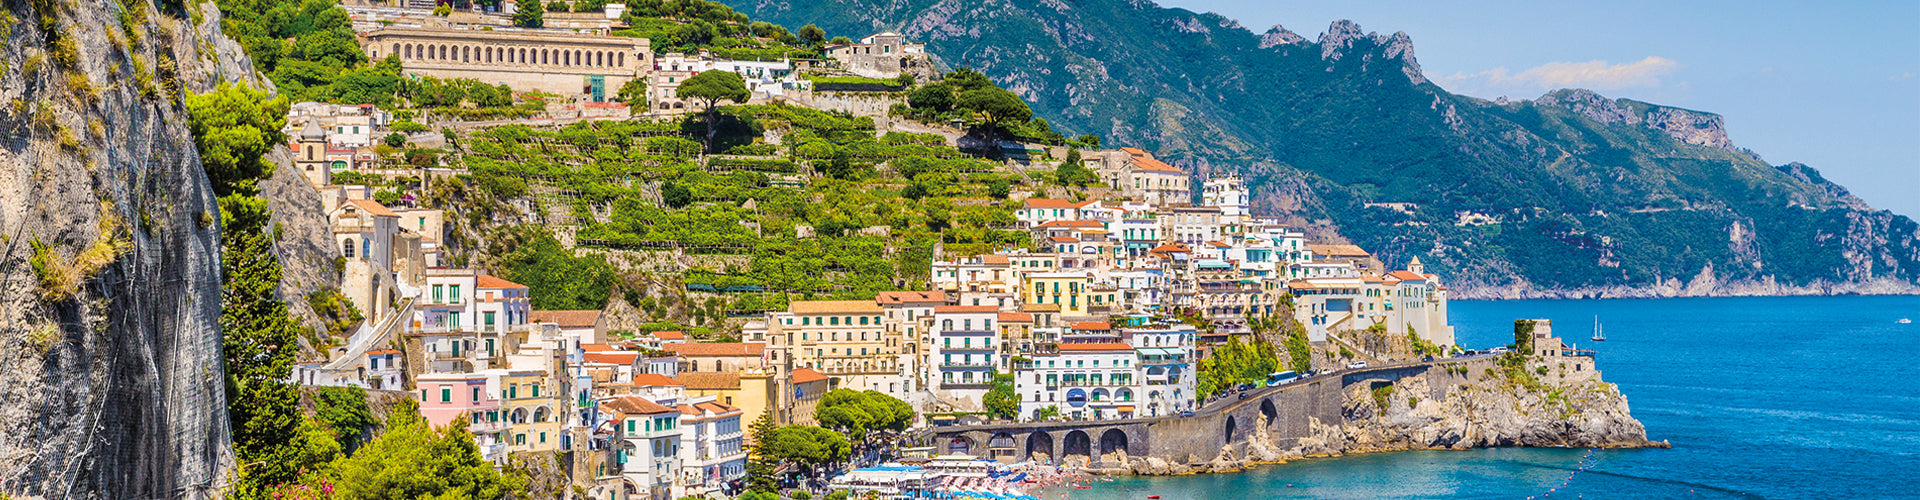 The Amalfi Coastline in Southern Italy